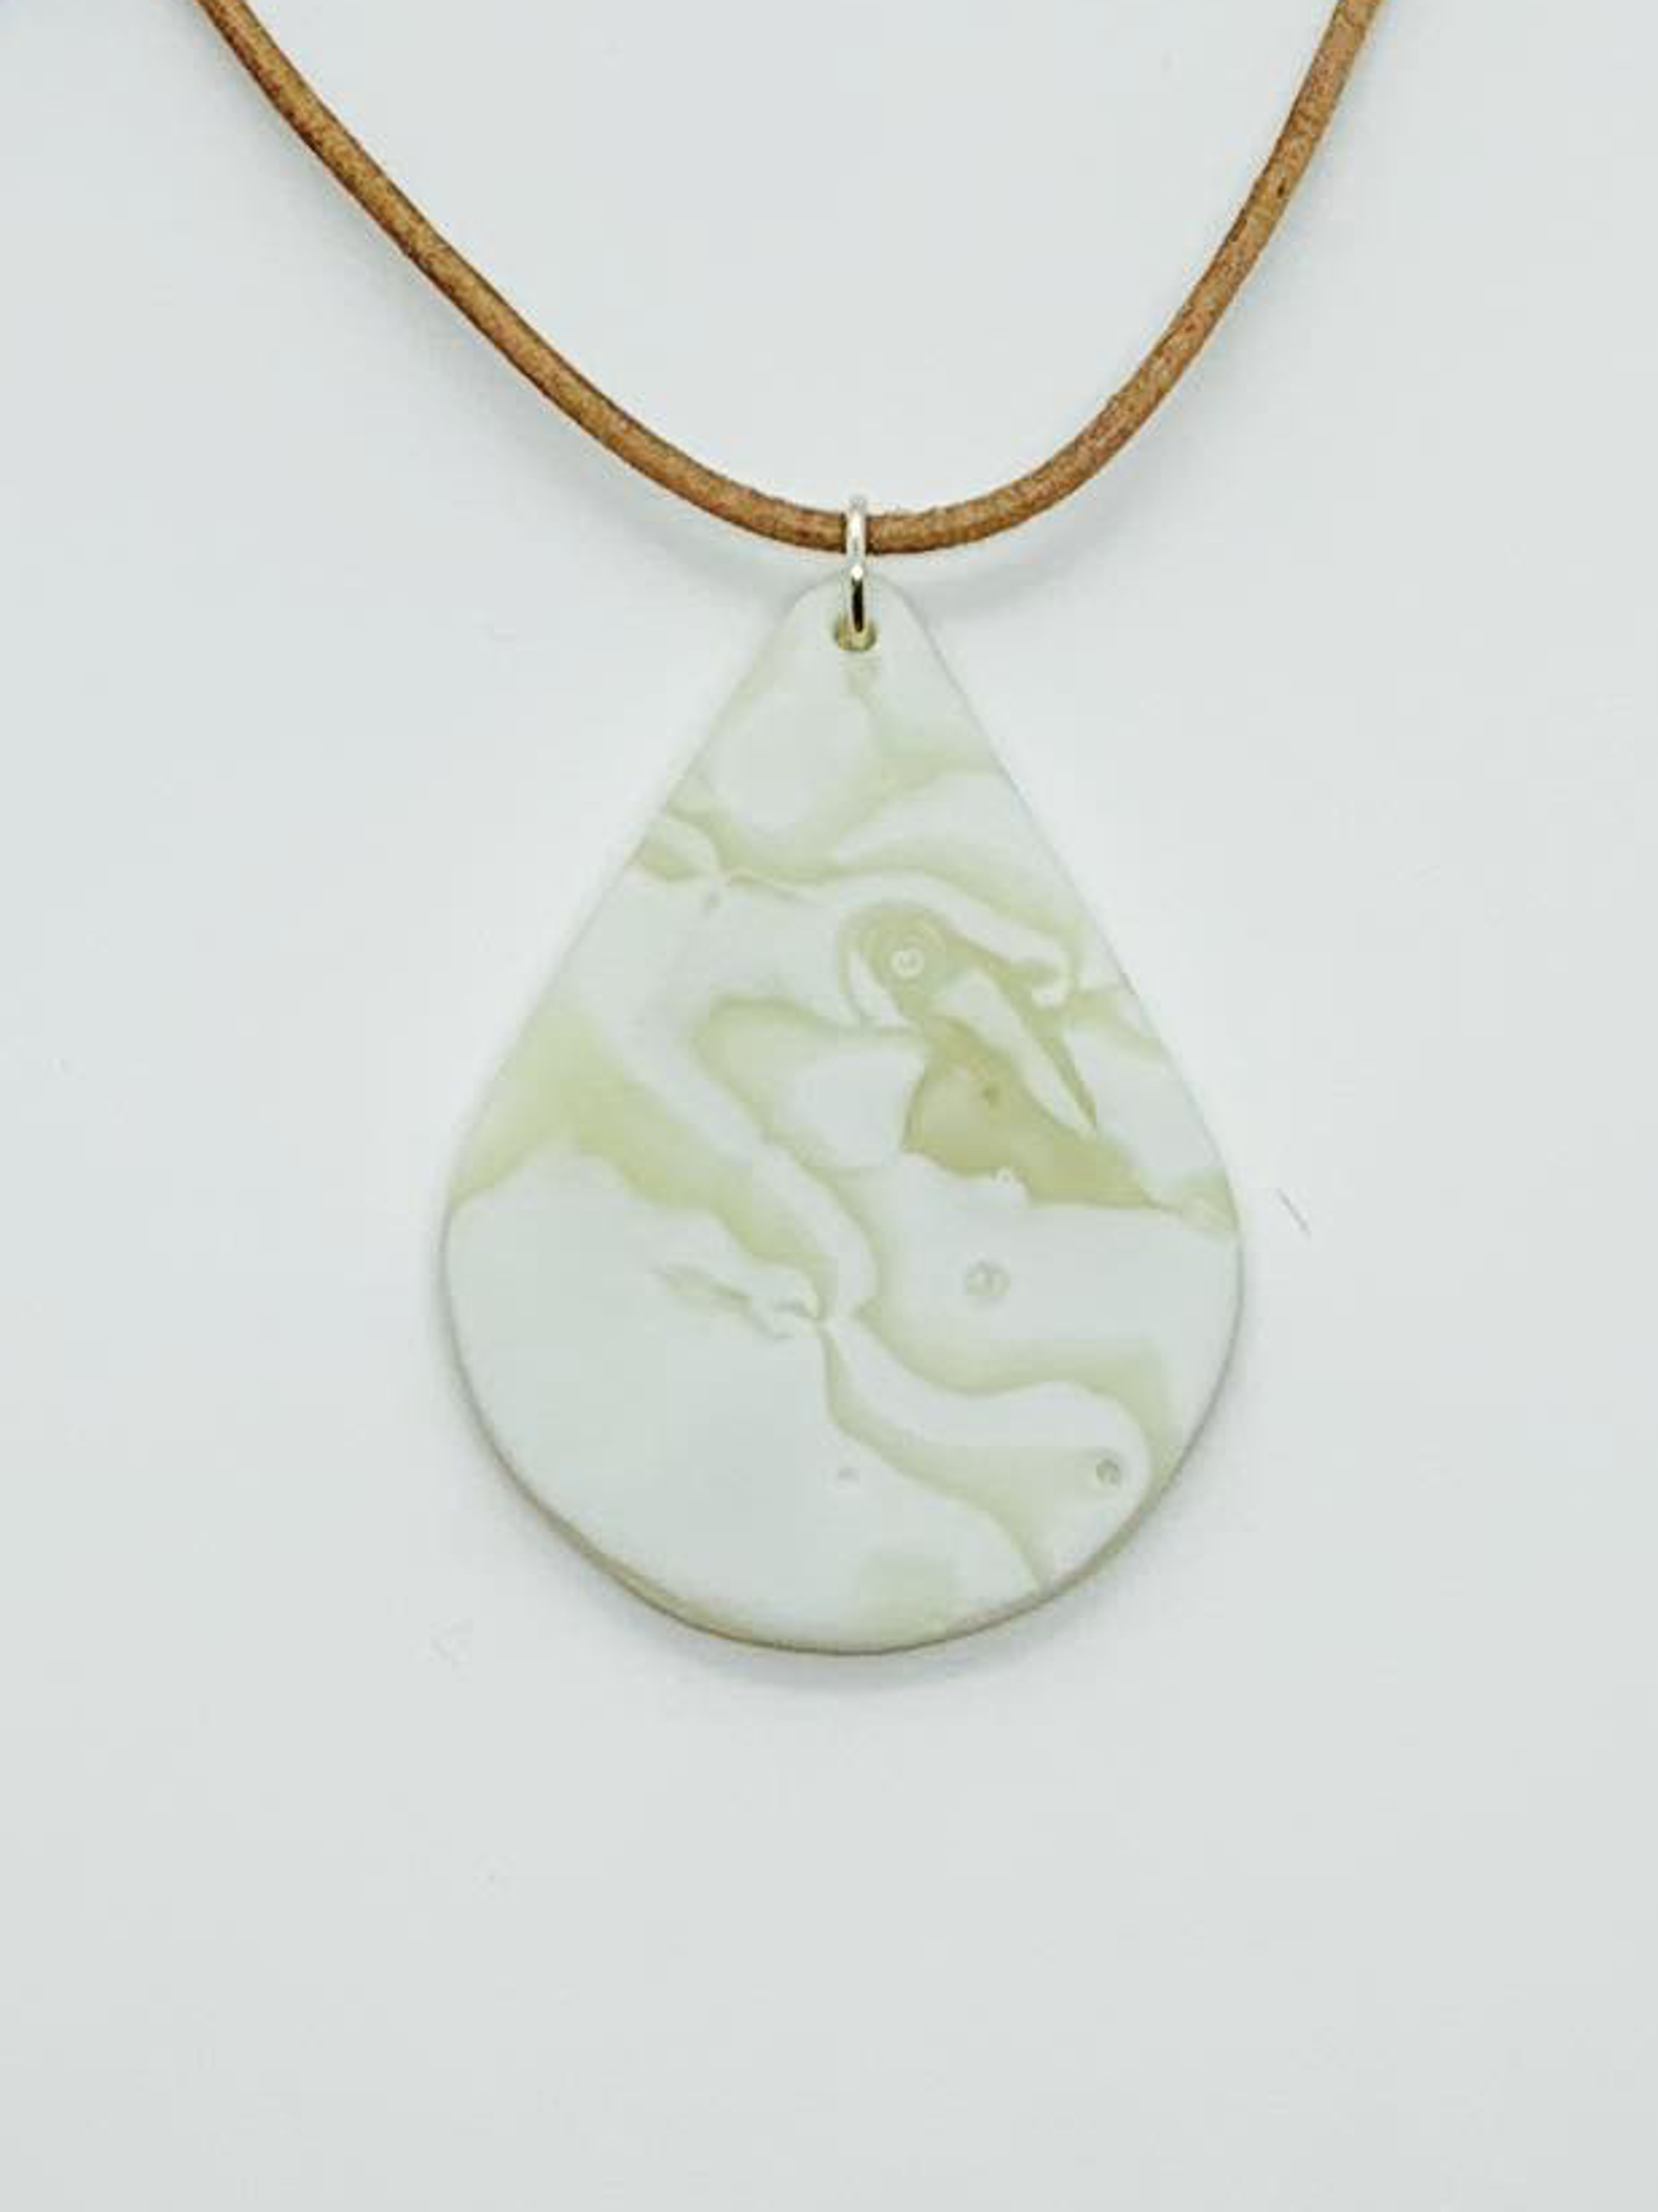 Molten Glass Necklace Teardrop - Linen & Vanilla Cream in Satin by Chris Cox